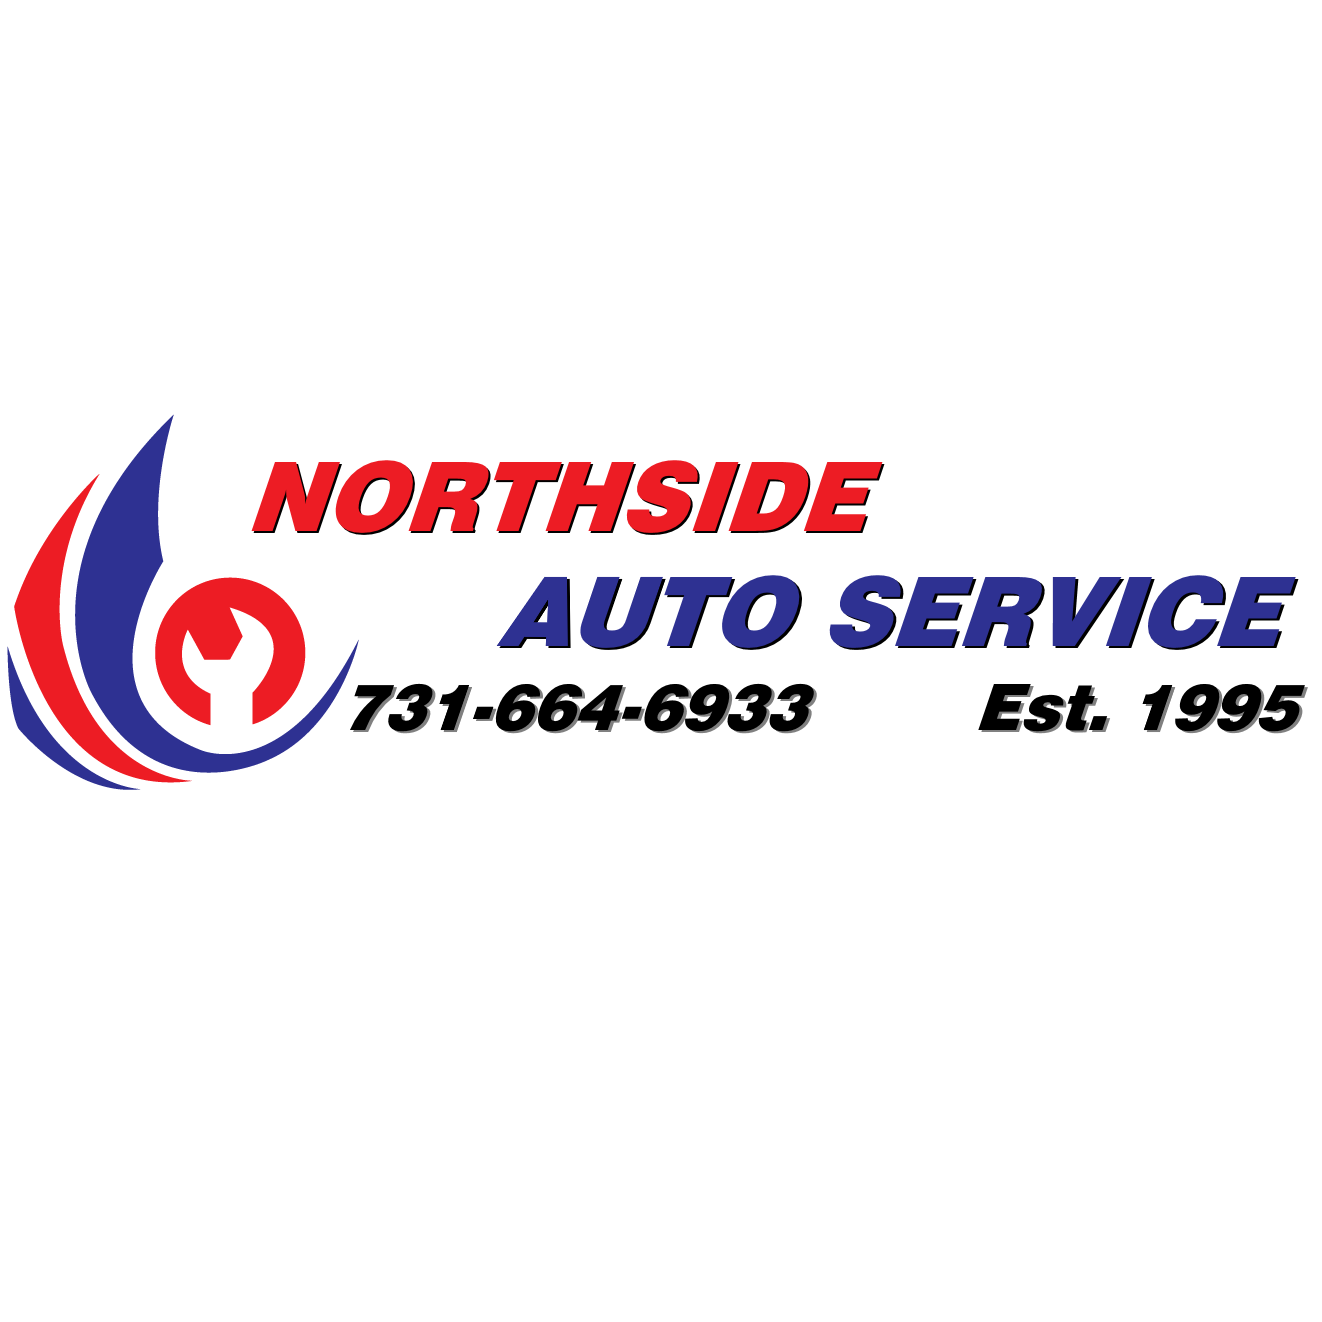 Northside Auto Service - Jackson, TN 38305 - (731)664-6933 | ShowMeLocal.com